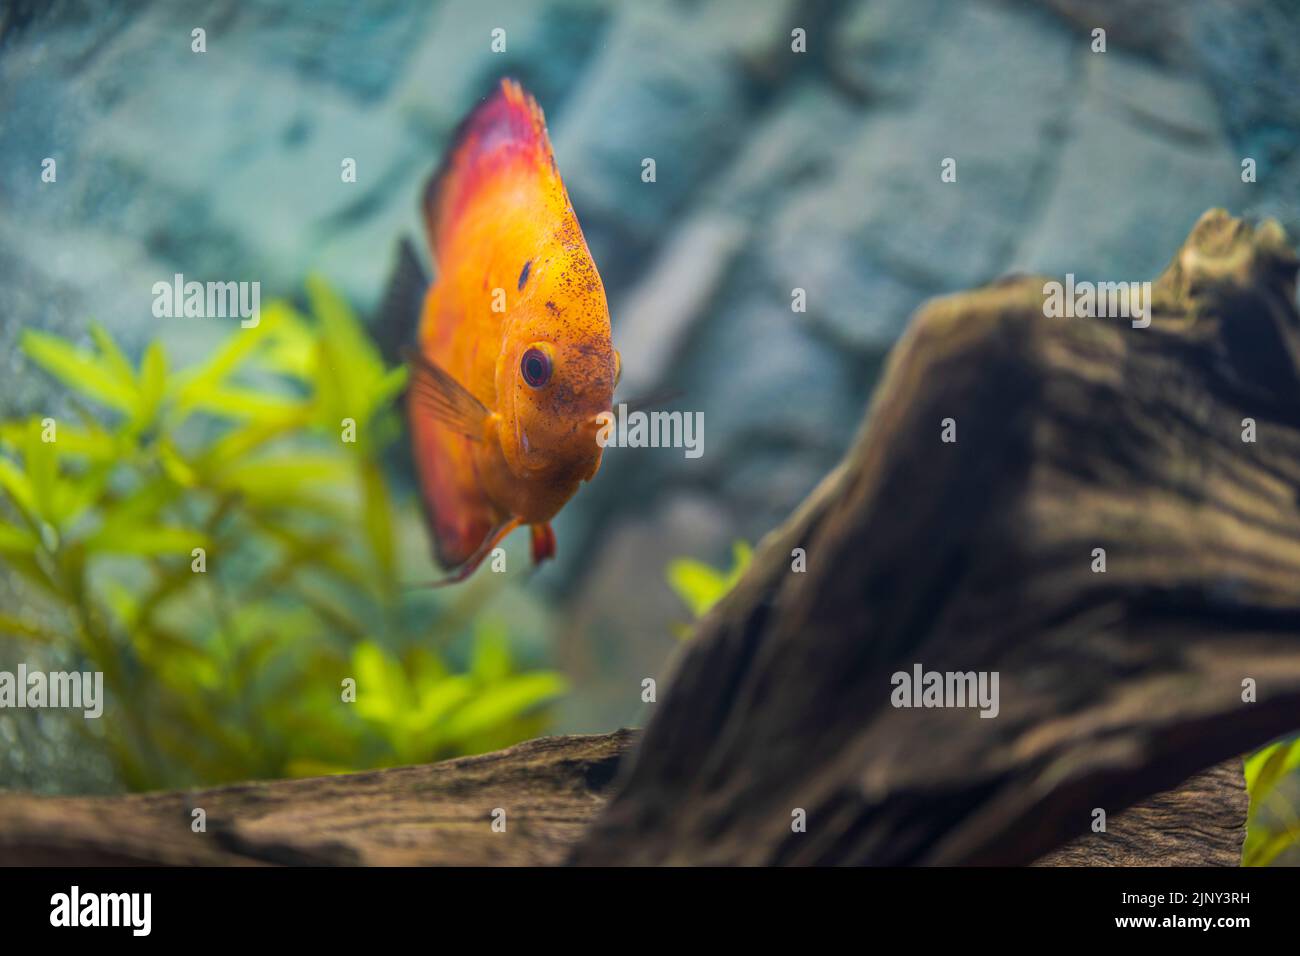 Close up view of red melon discus aquarium fish. Hobby concept. Sweden. Stock Photo